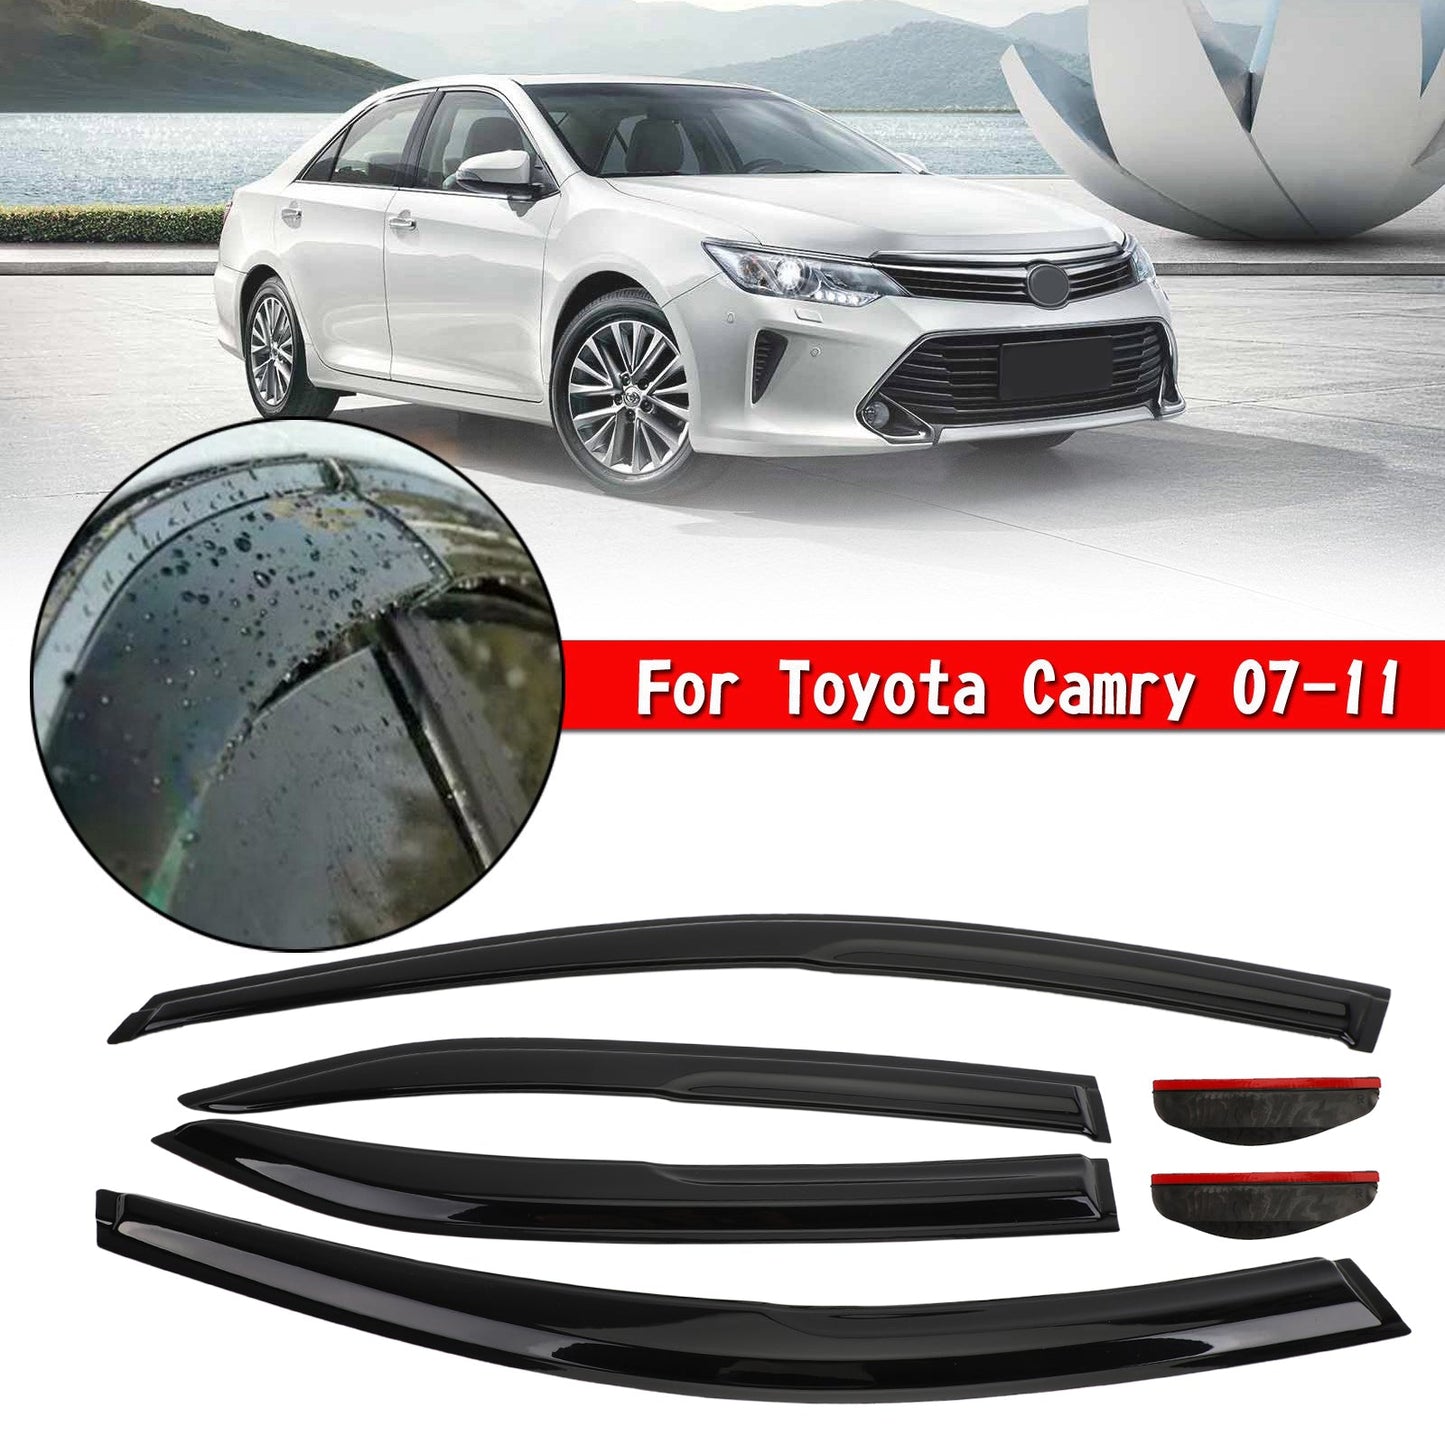 Toyota Camry 07-11 Autofenster Sun Rain Guard Visiere Kit 6PCS